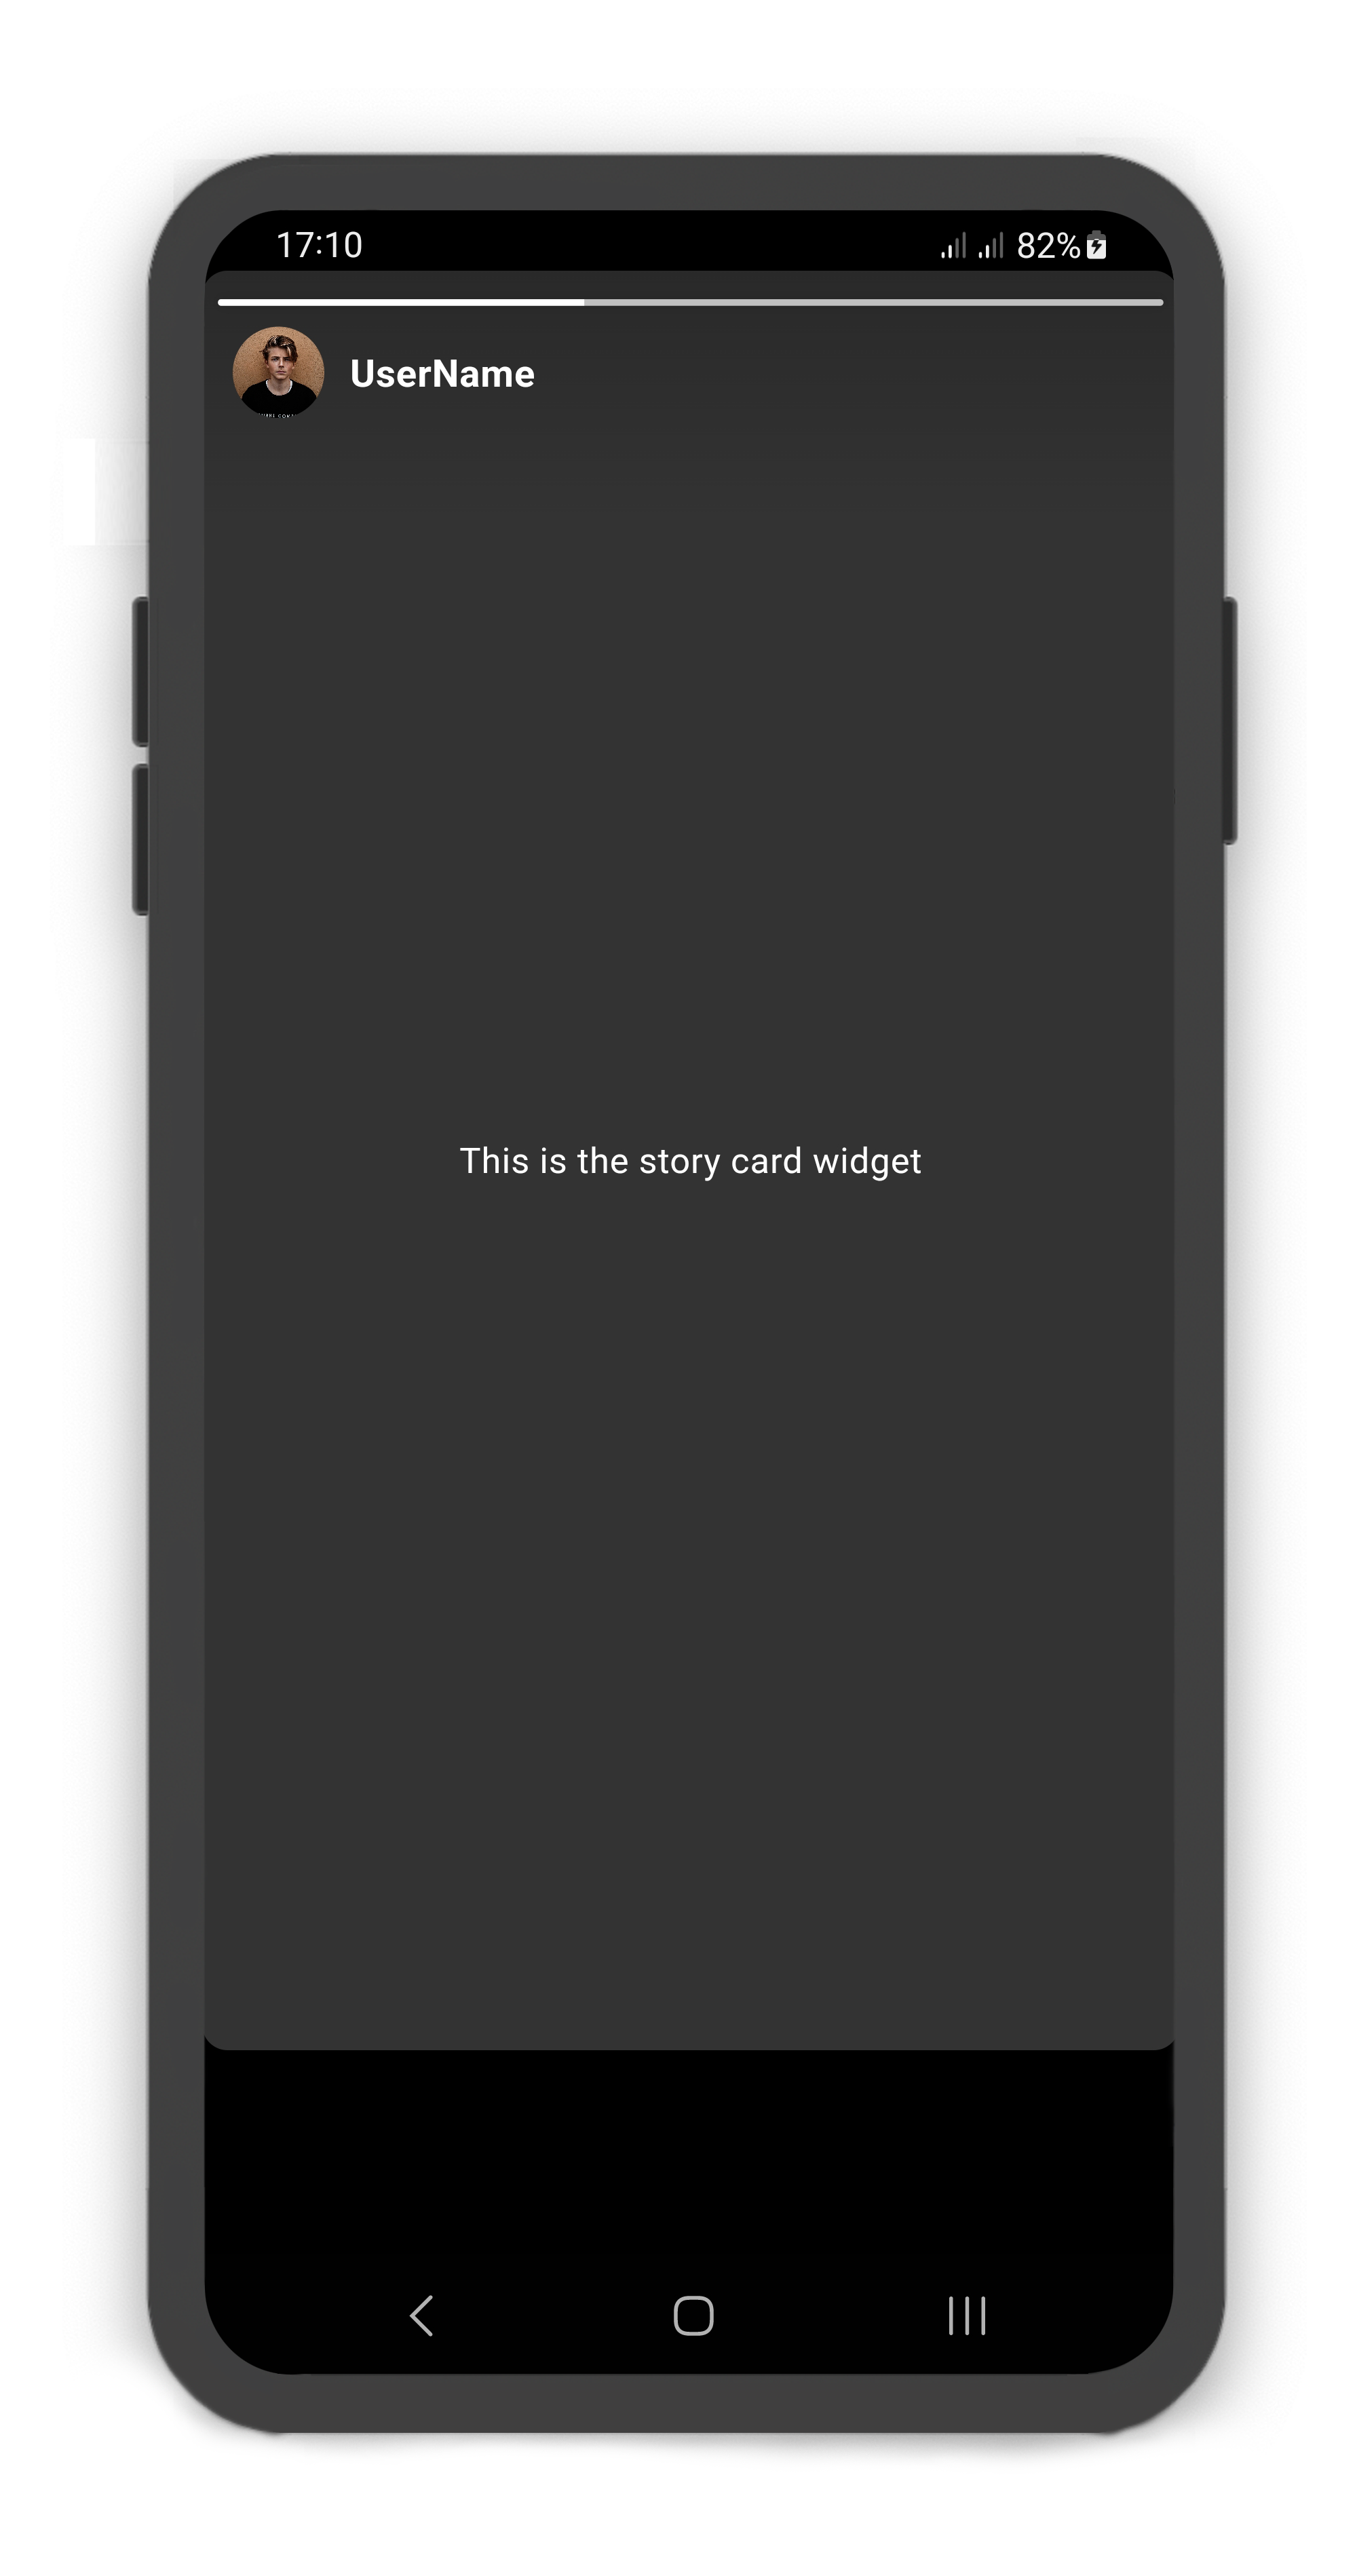 StoryCard